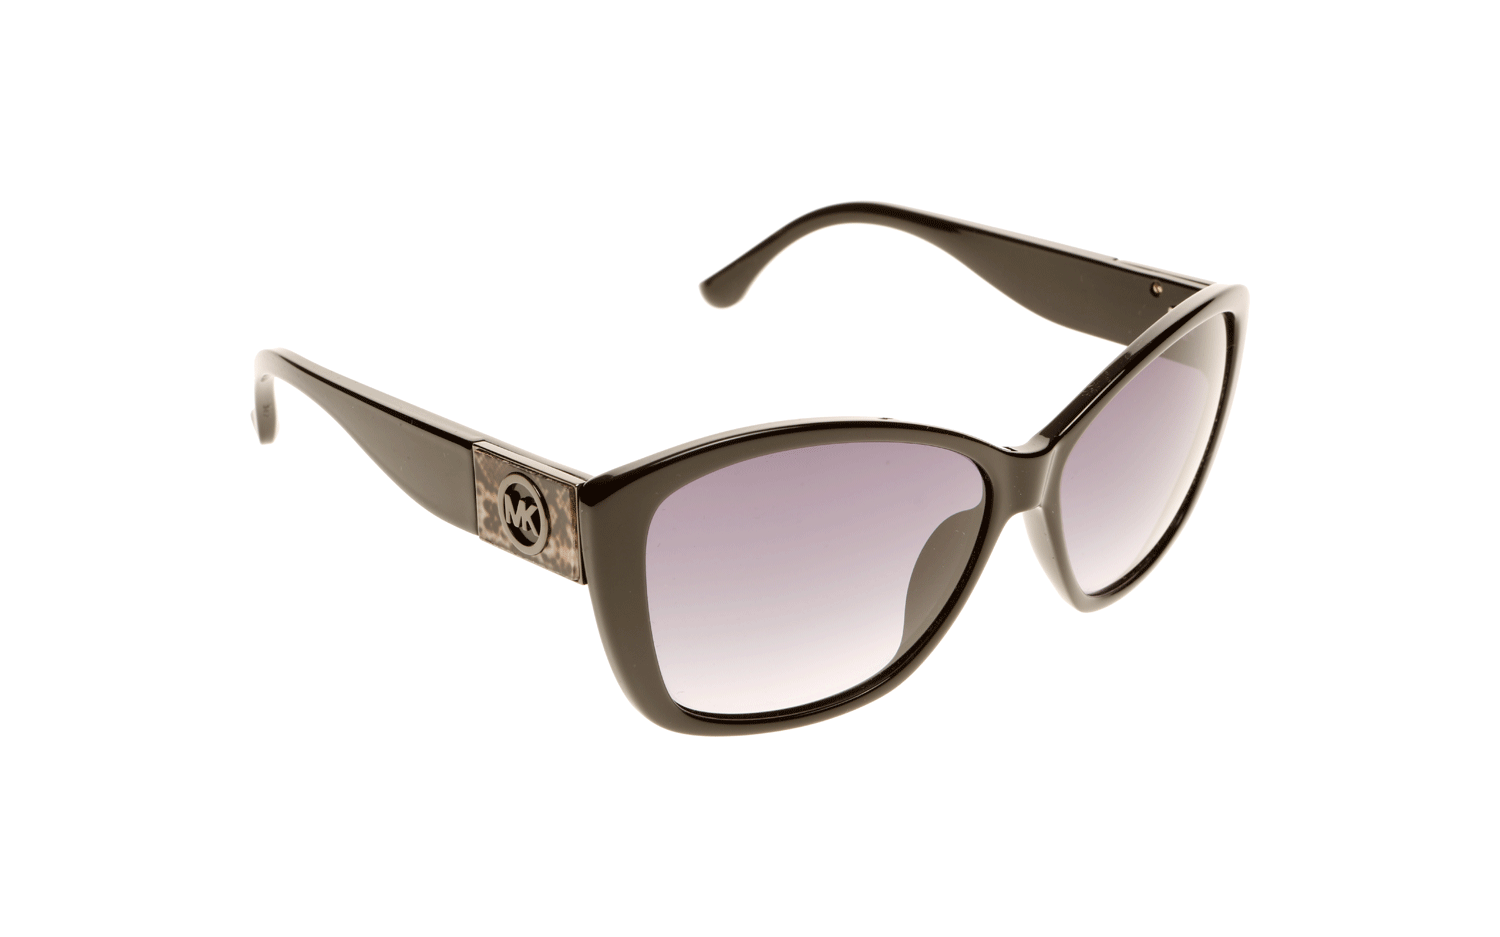 Michael Kors Lucy M2894s 001 58 Sunglasses Shade Station